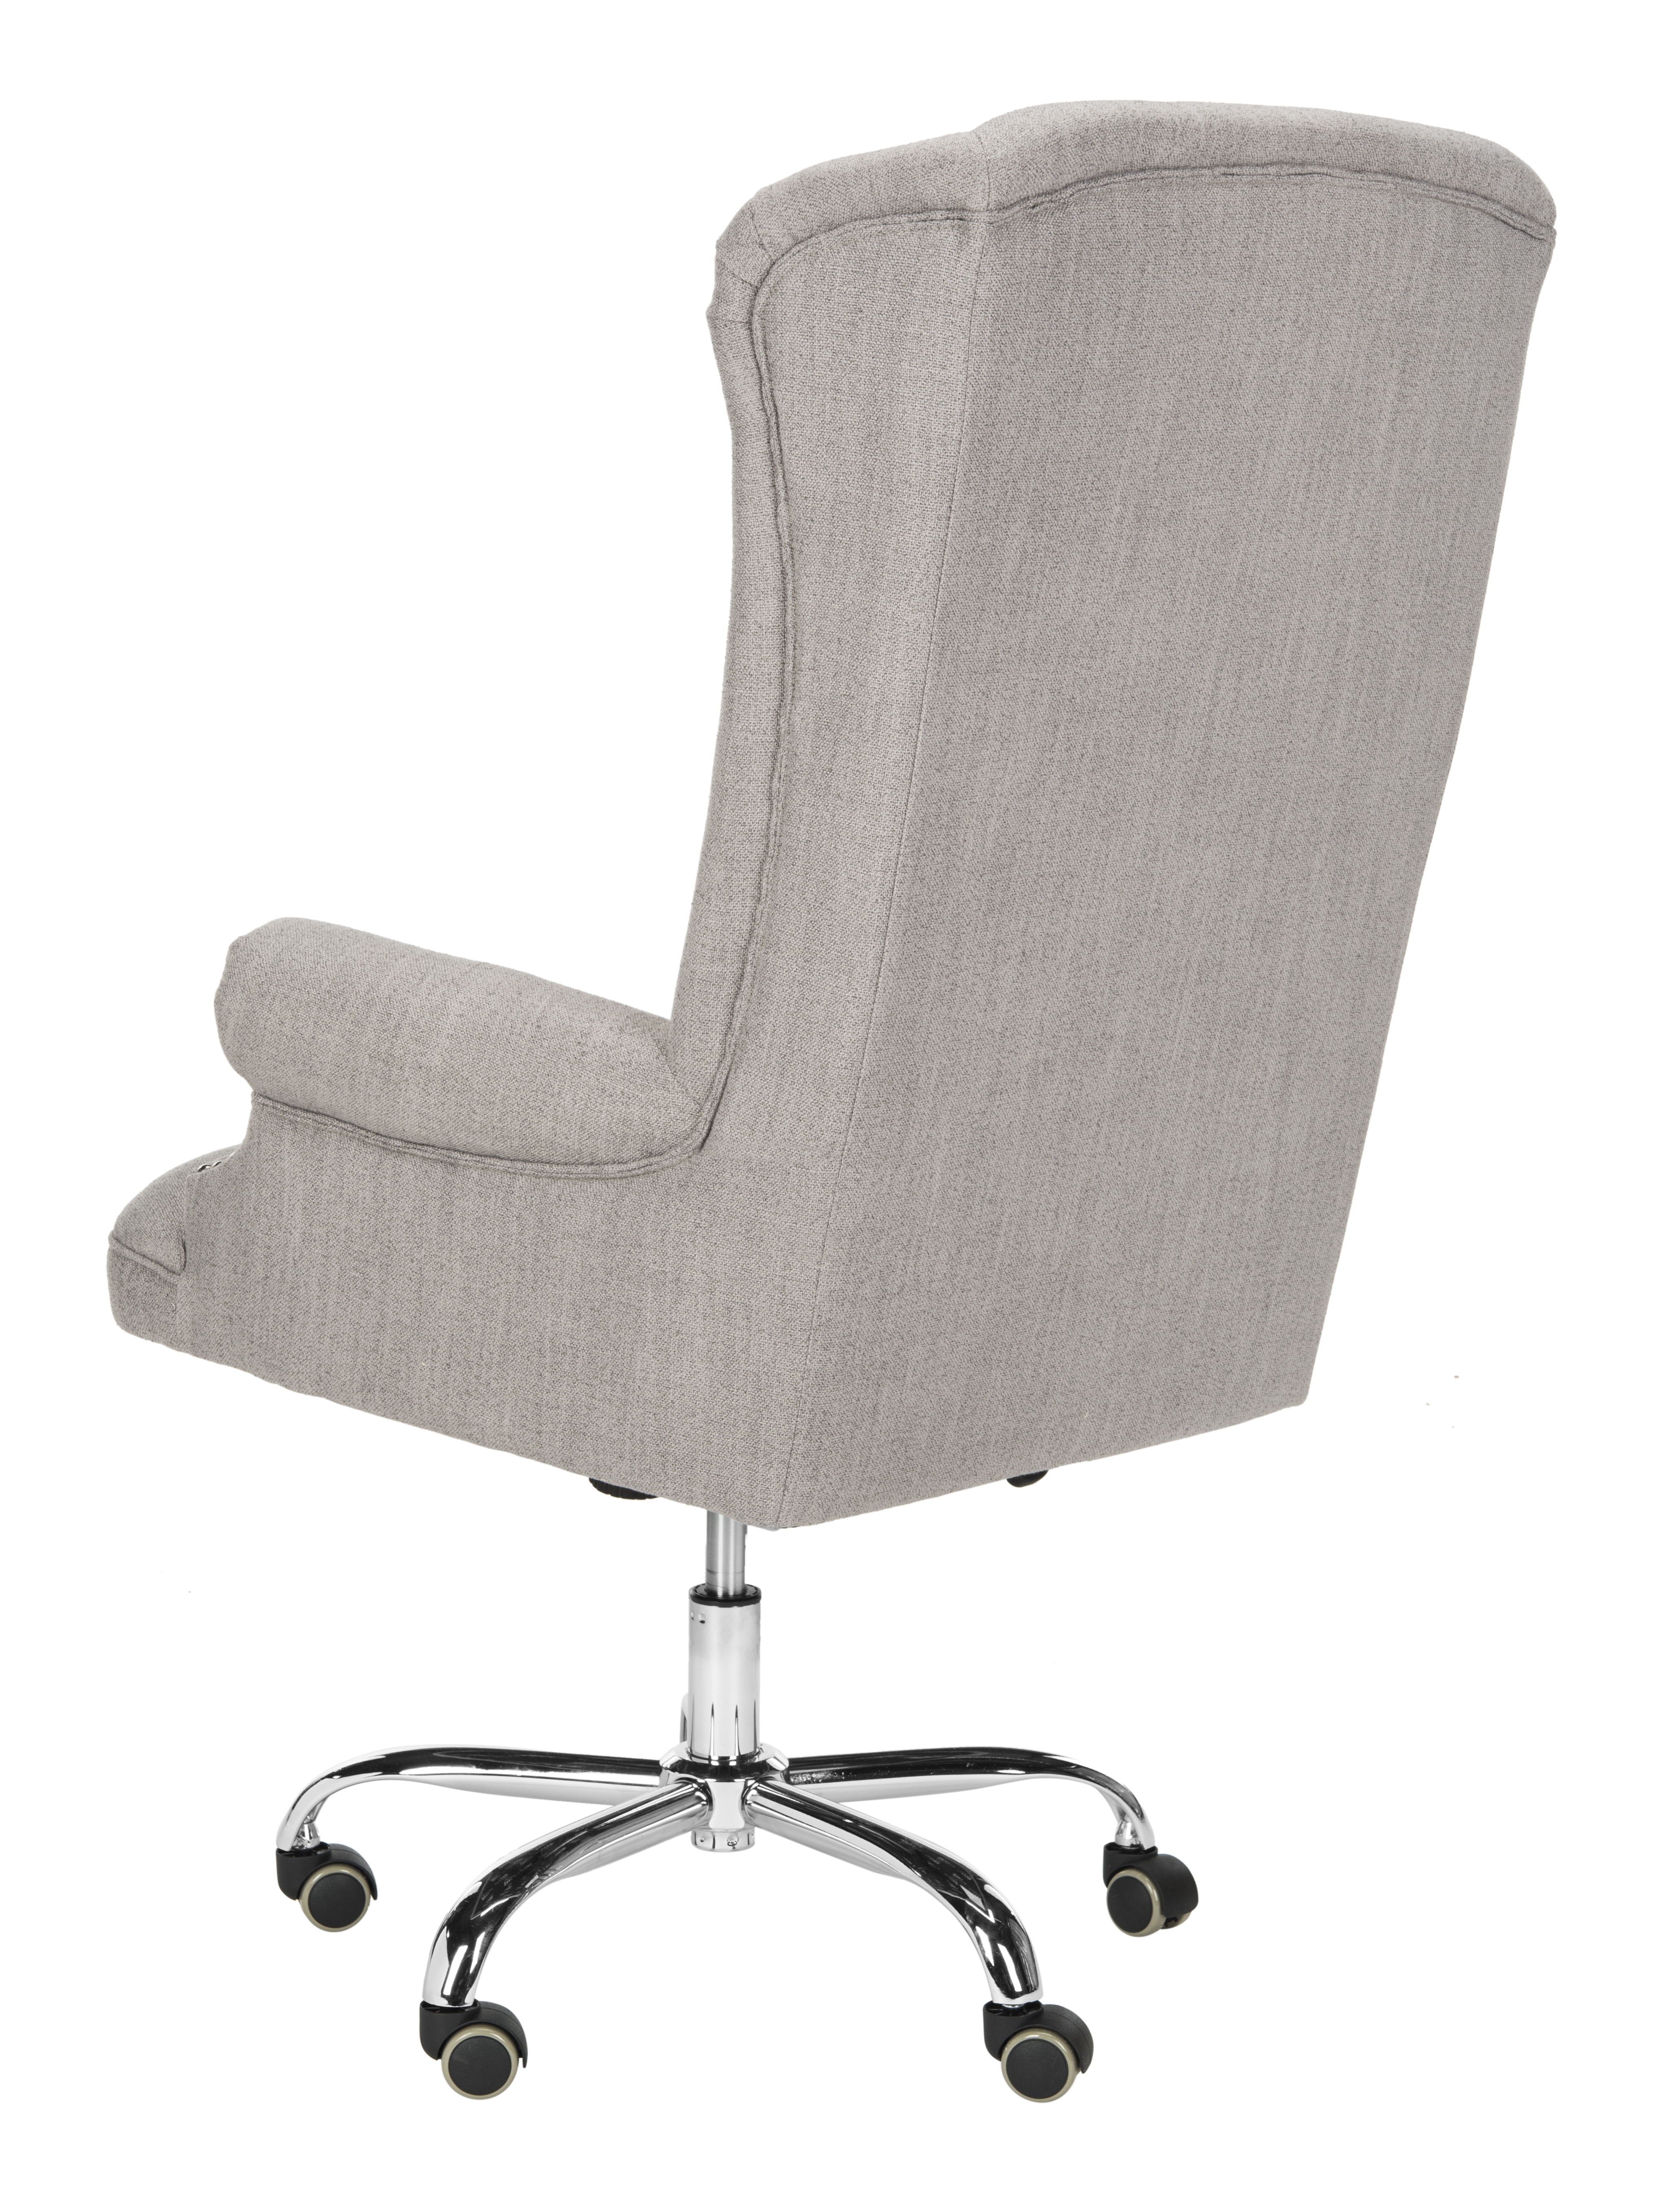 Ian Linen Chrome Leg Swivel Office Chair - Grey/Chrome - Arlo Home - Image 4